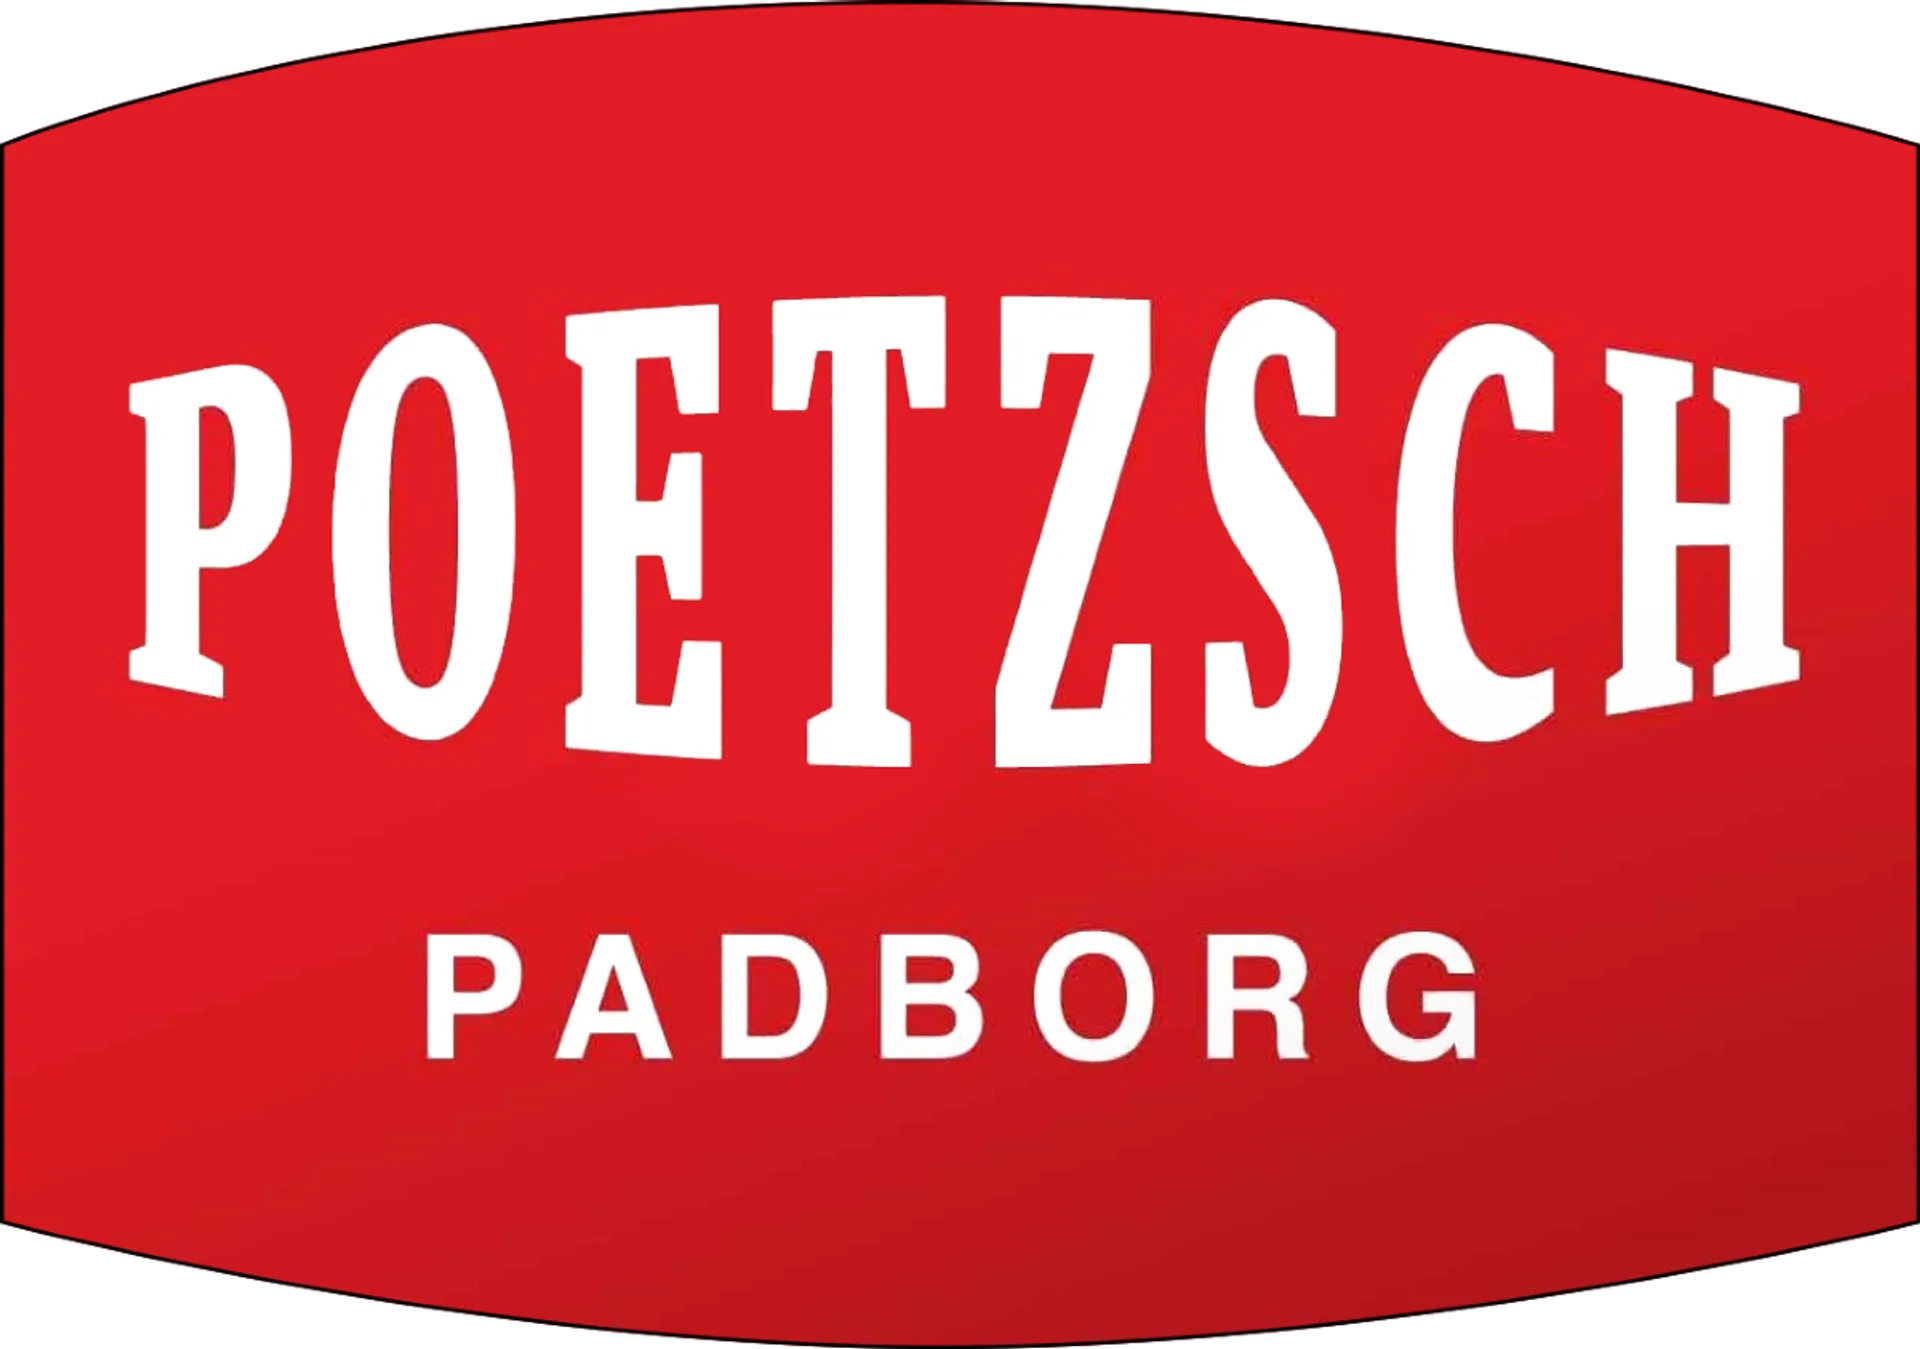 POETZSCH PADBORG logo